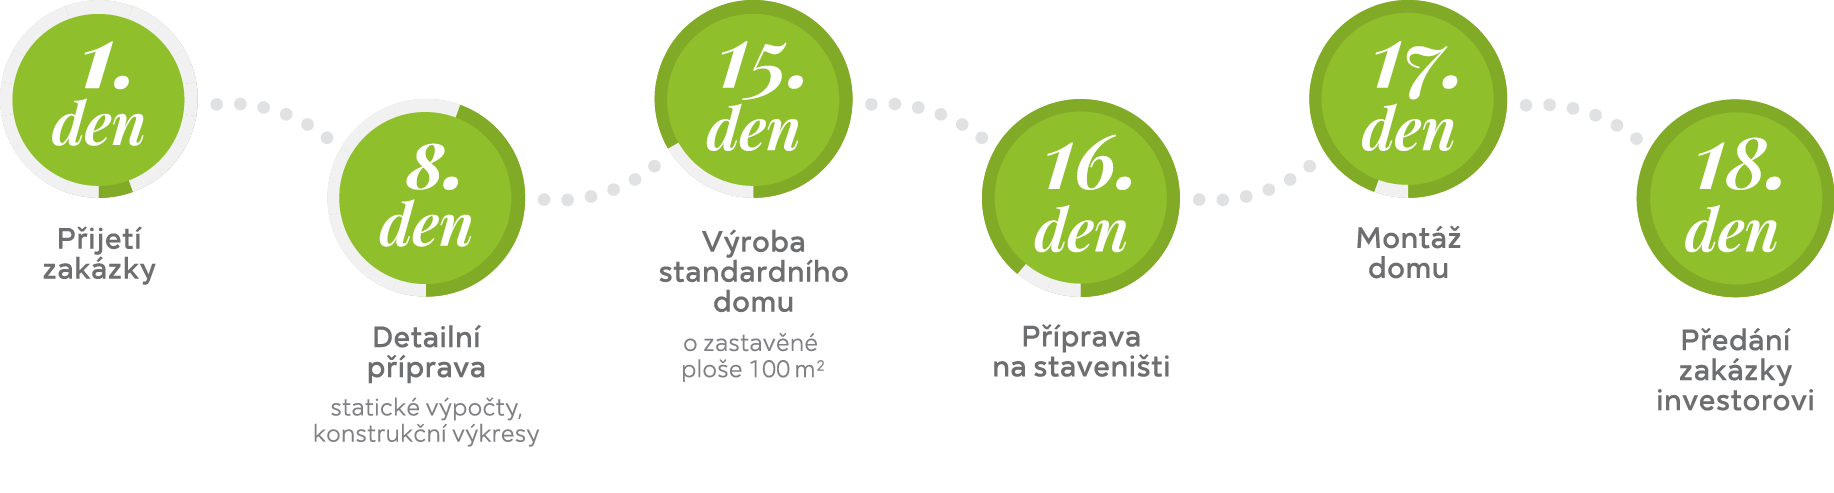 infografika_green-05